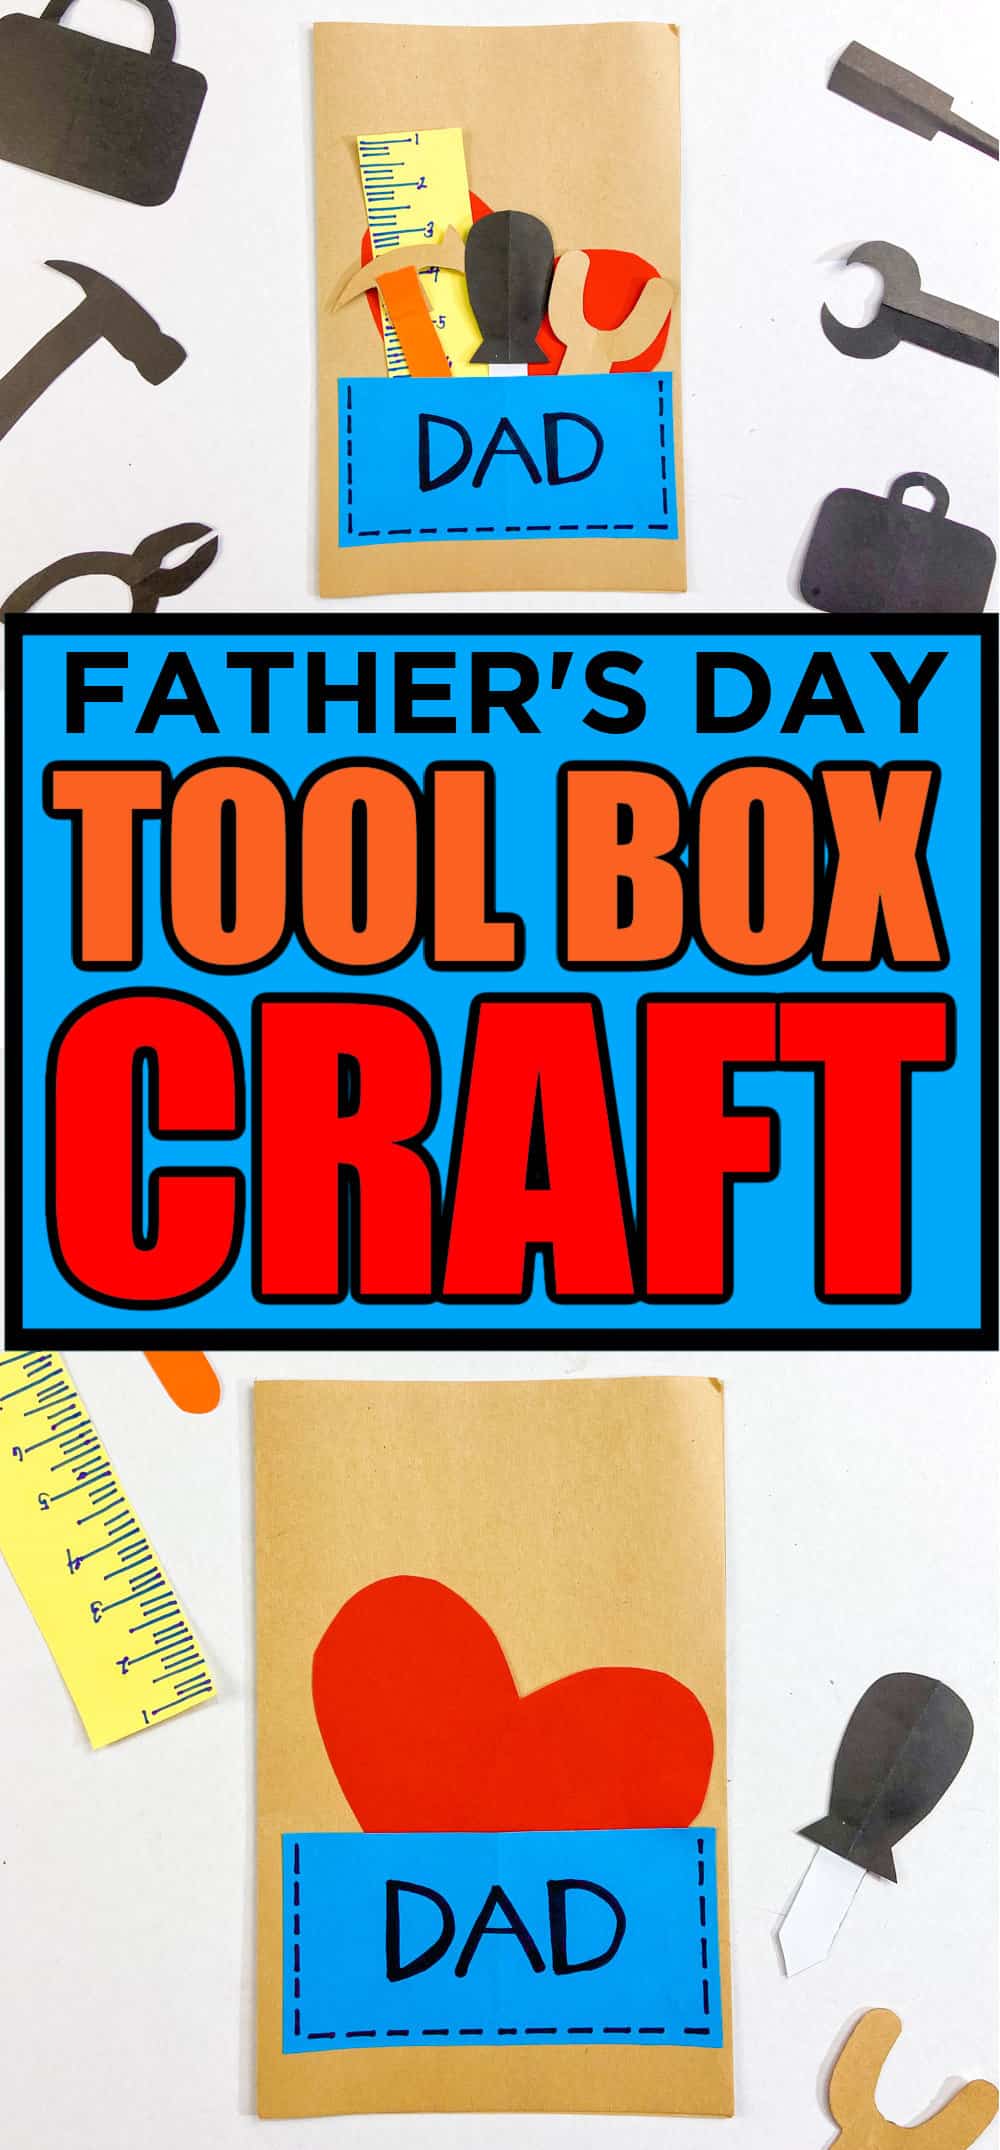 Dad's Toolbox craft Card